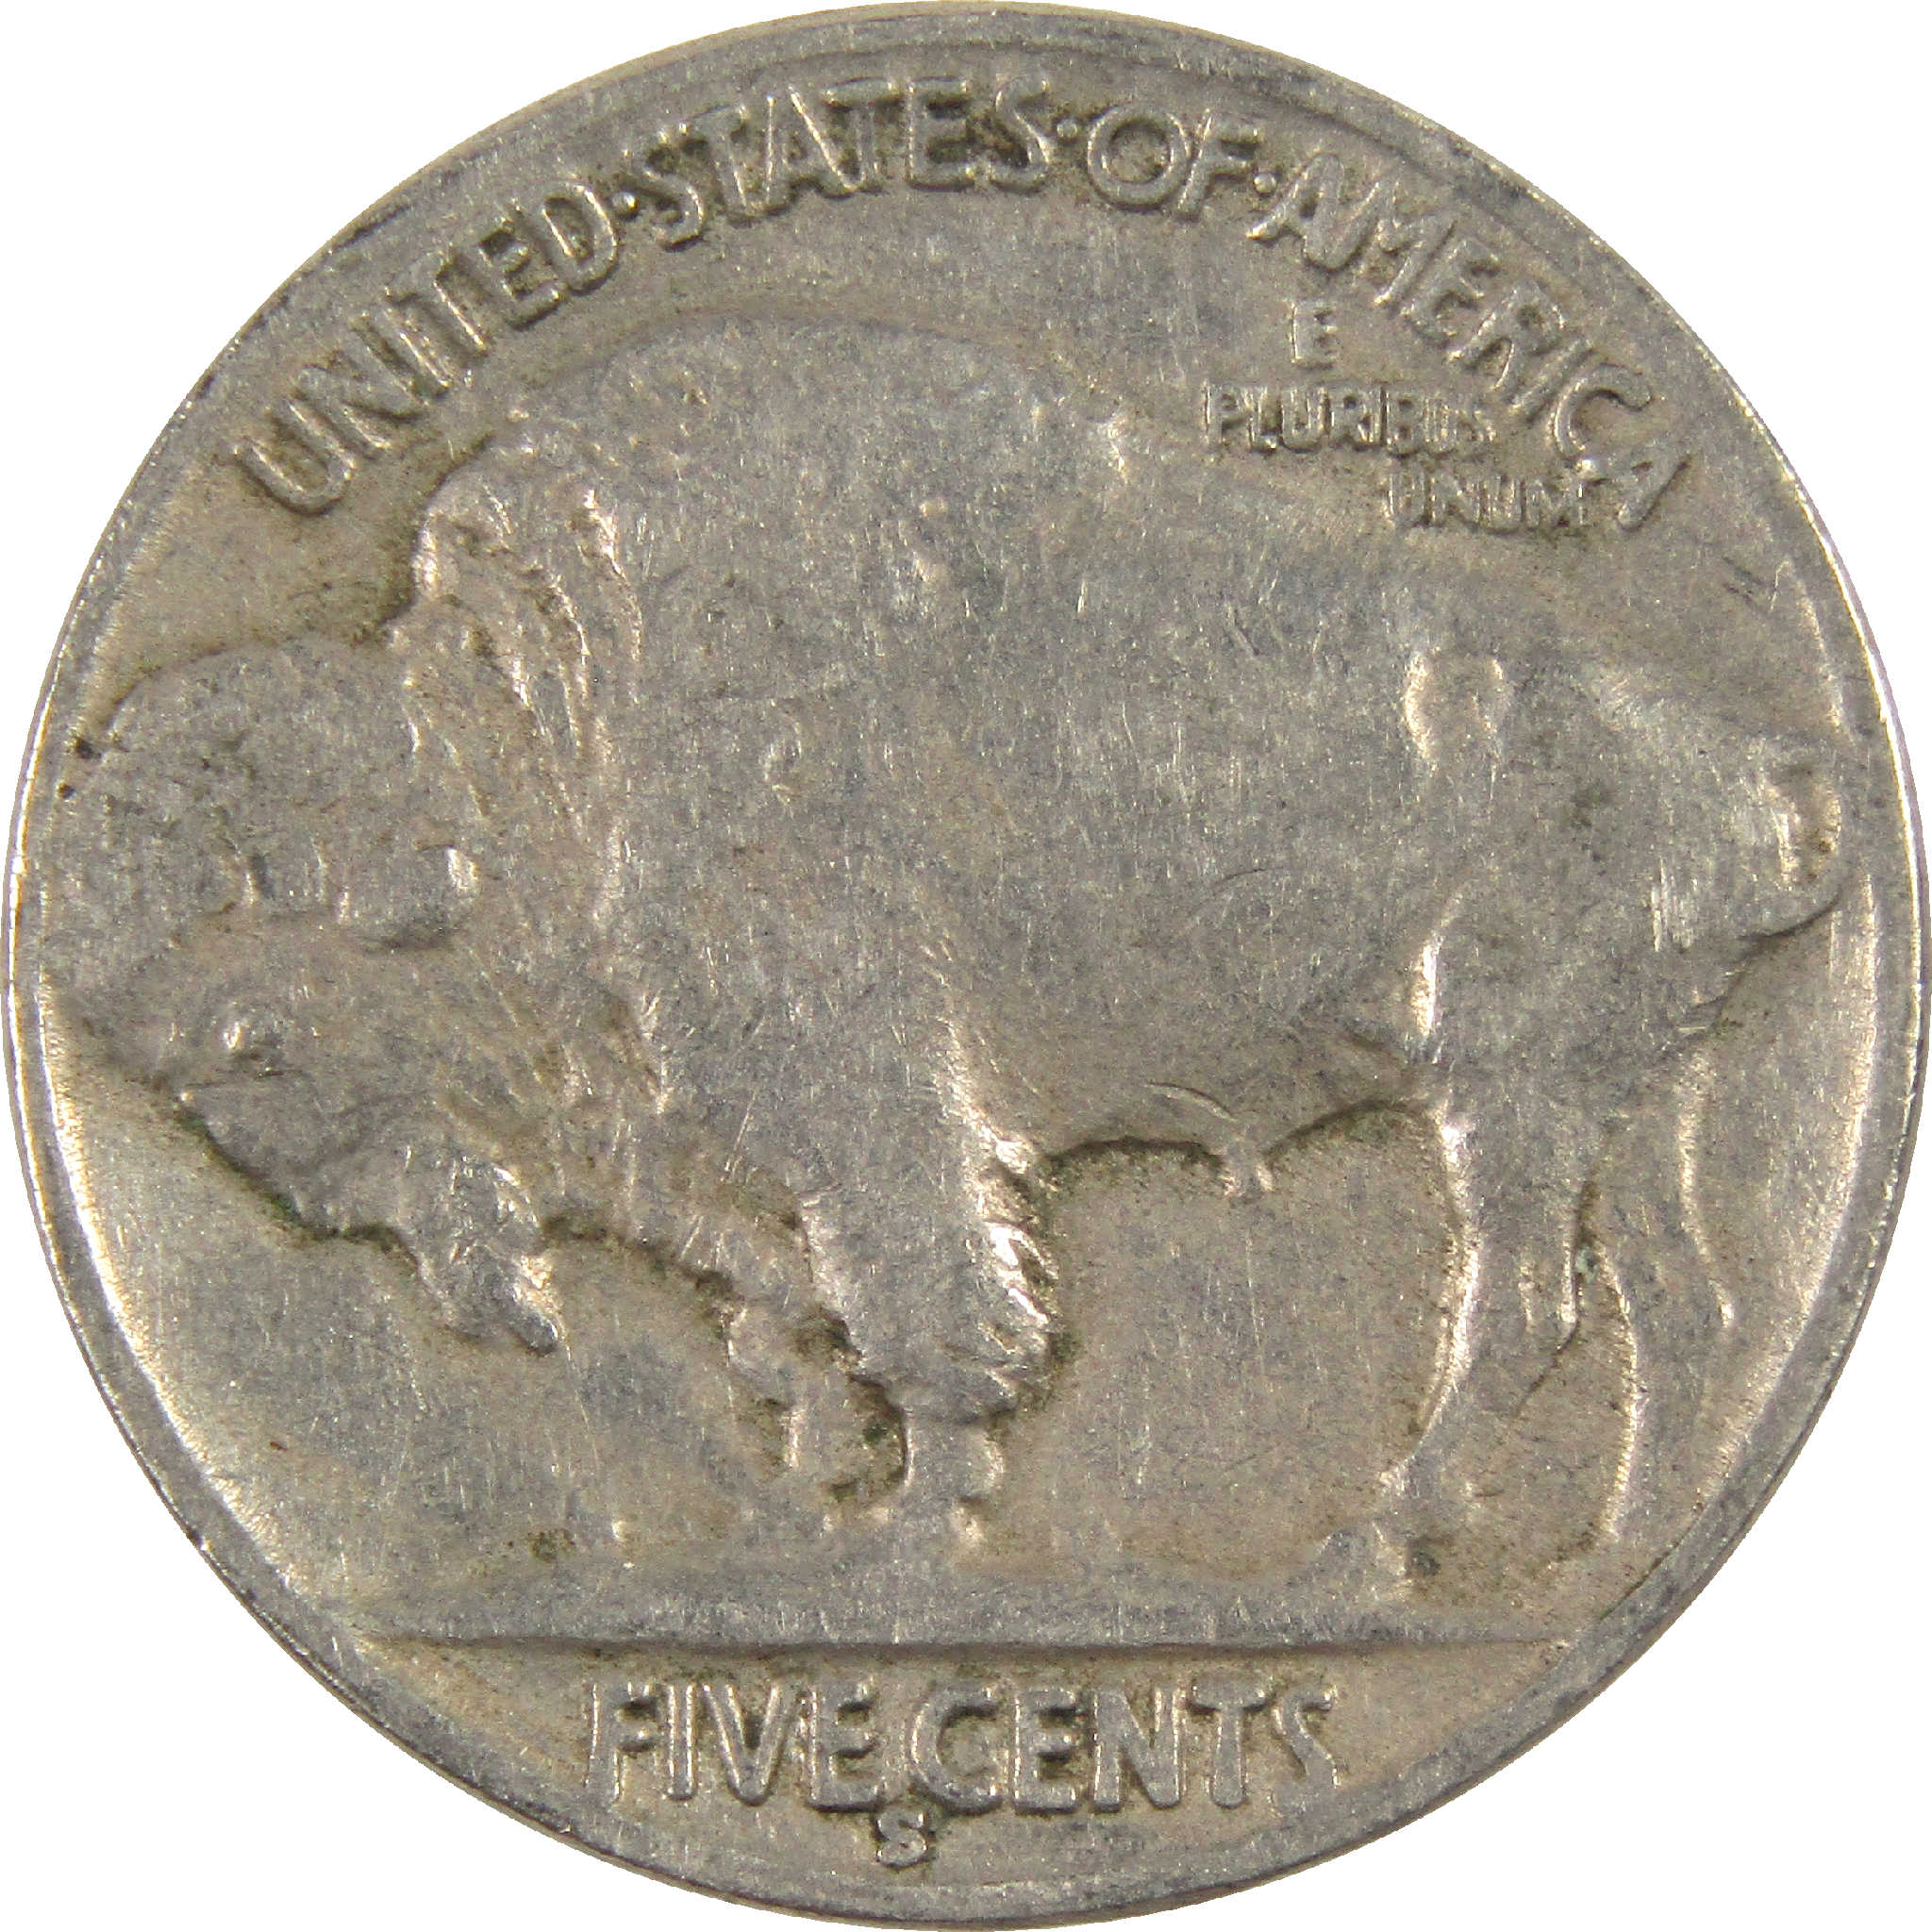 1931 S Indian Head Buffalo Nickel VG Very Good 5c Coin